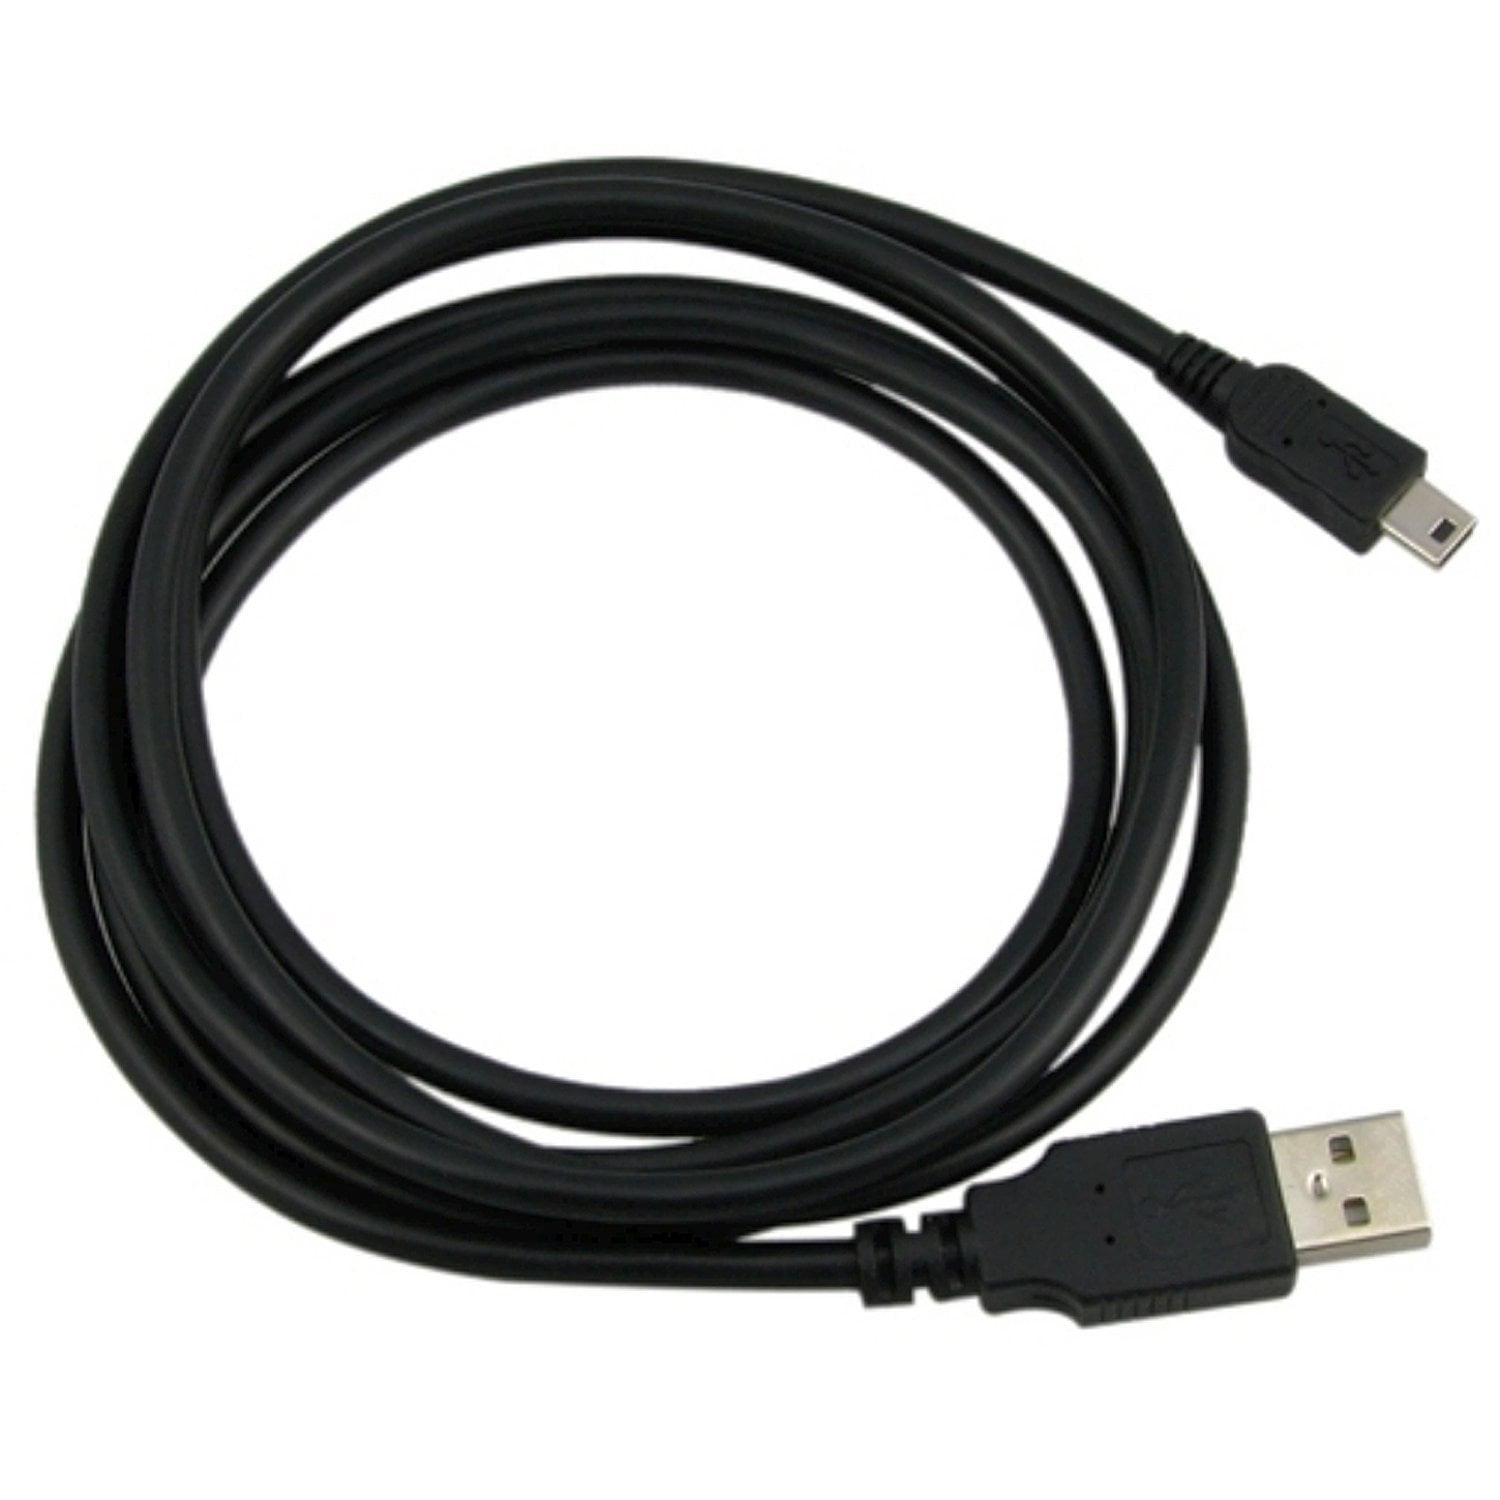 MaxLLTo USB Data SYNC Cable Cord for Leapfrog Tag Junior #22003 22004 22010 21201 20565 